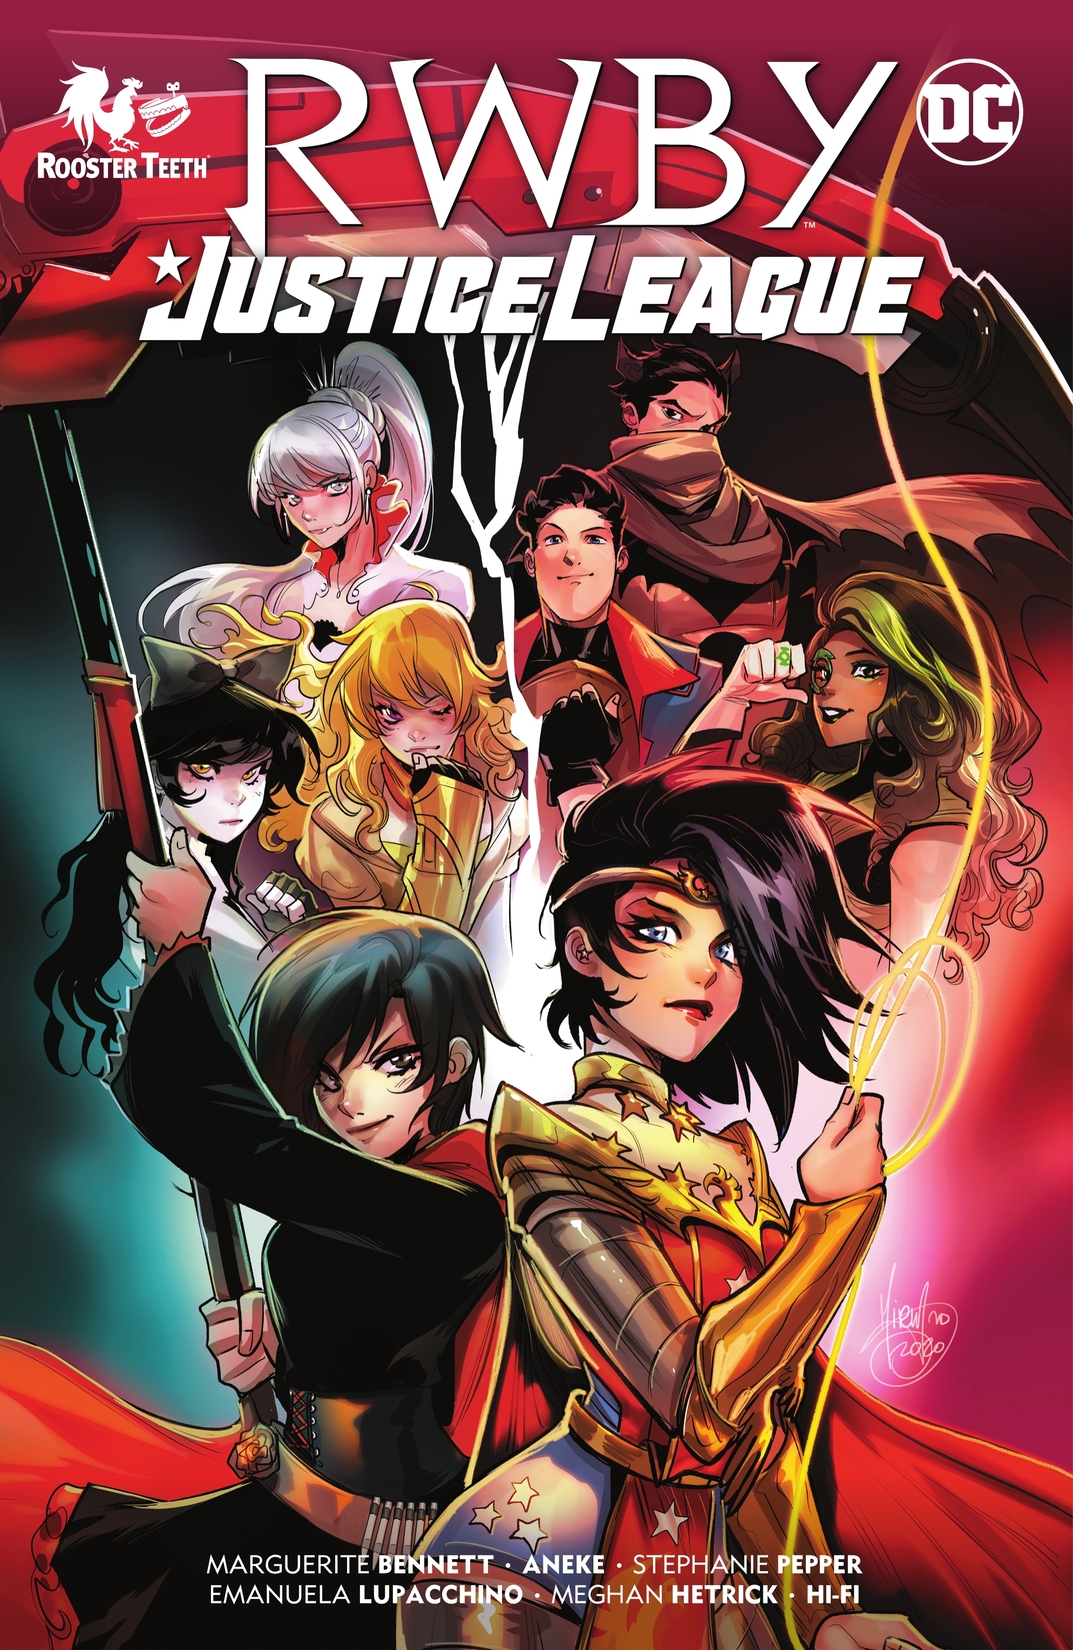 RWBY/Justice League preview images